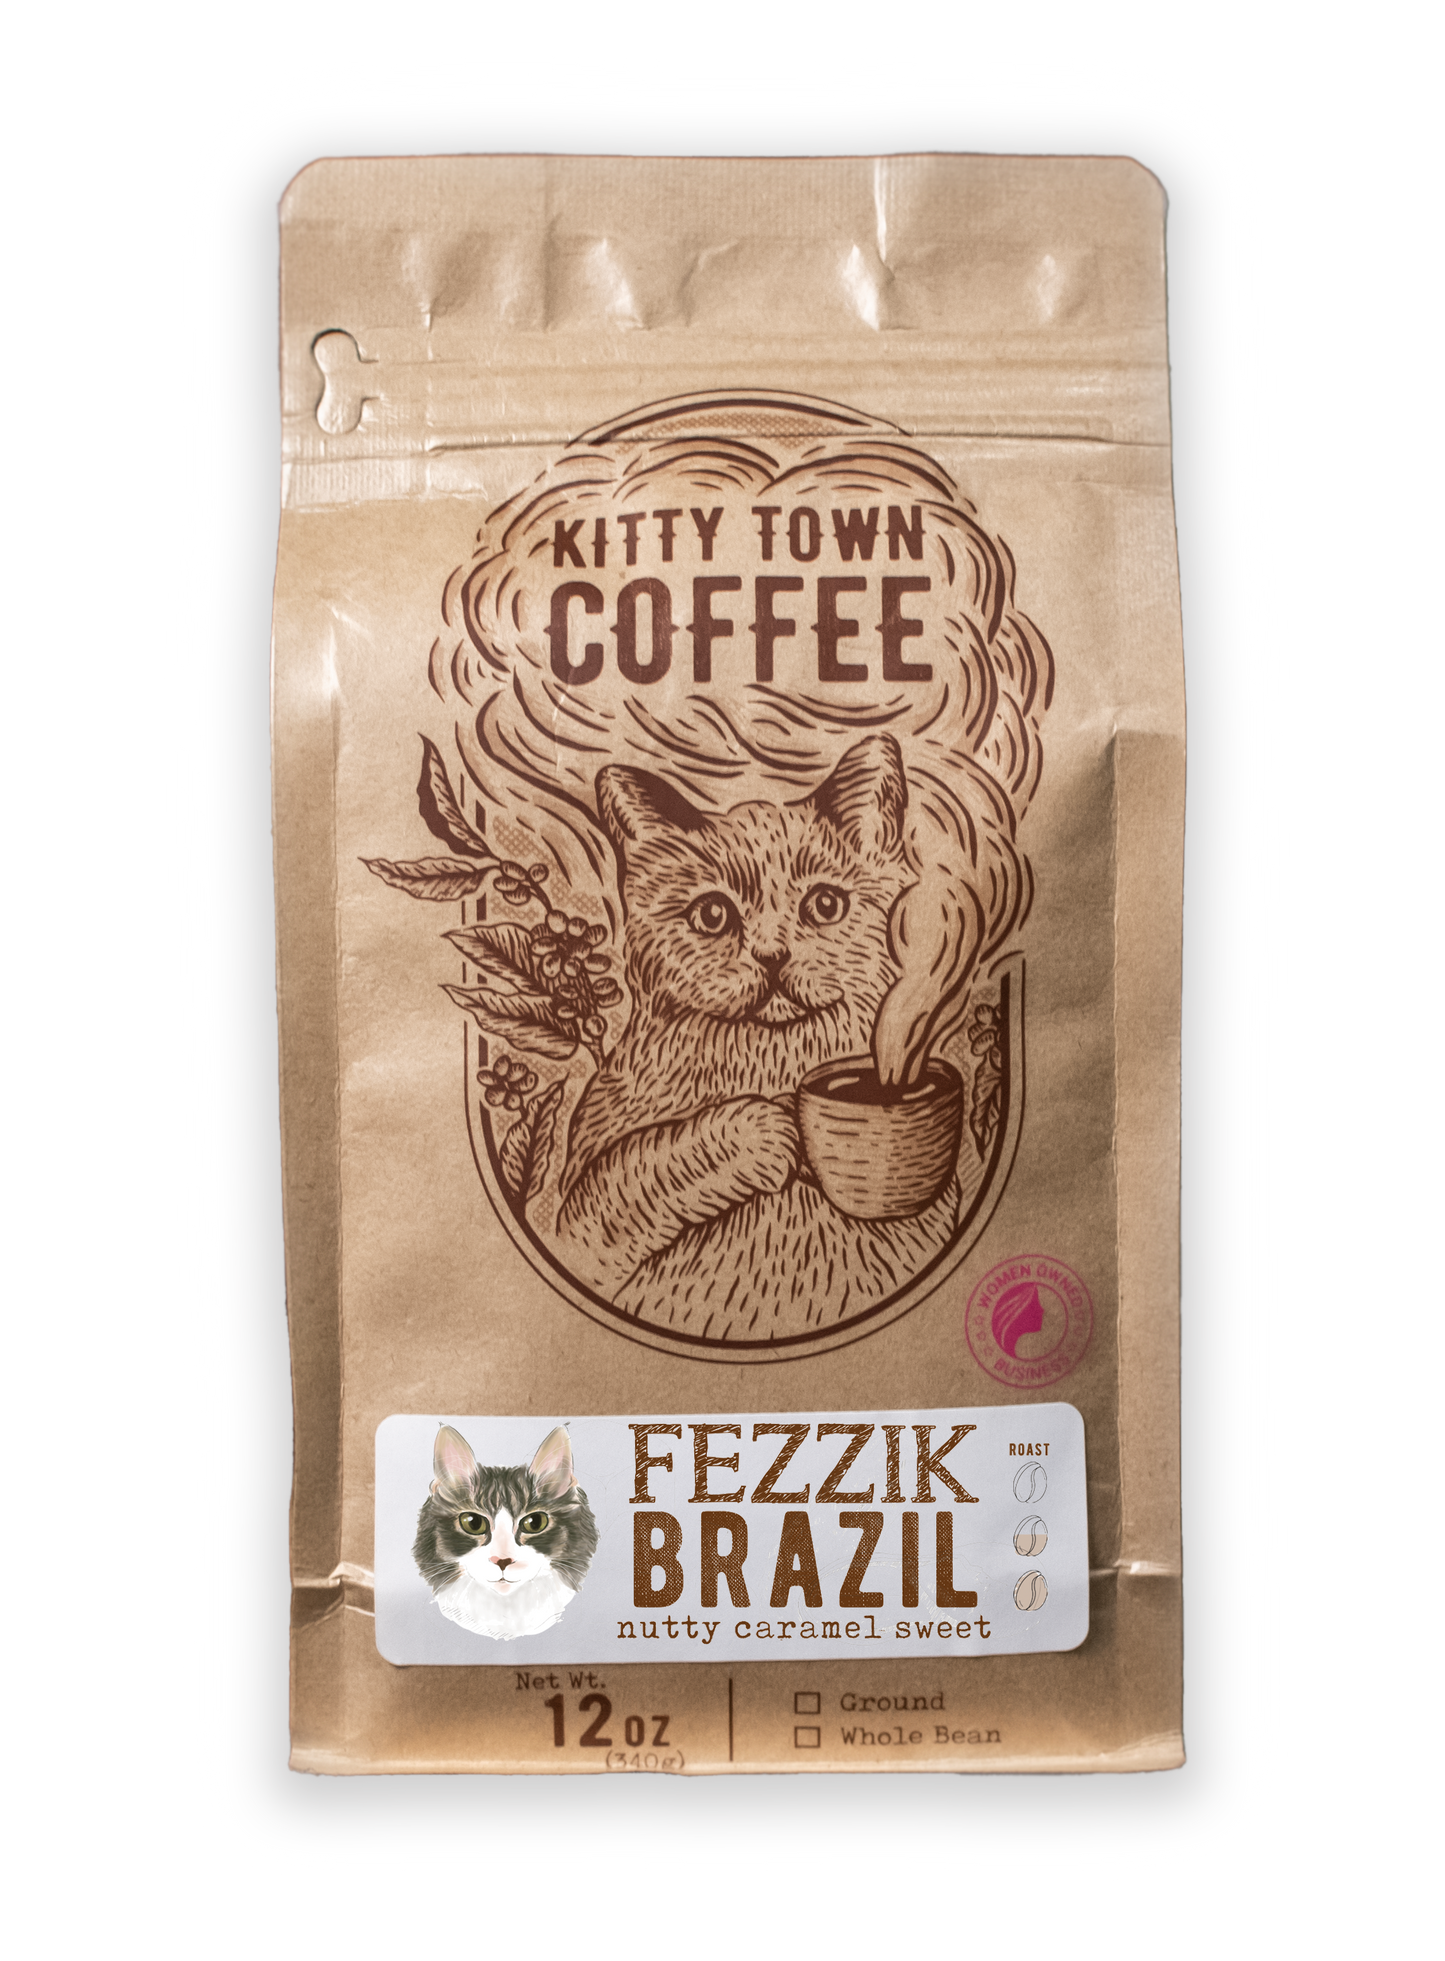 Fezzik: Medium Dark Roast from Brazil - 12oz